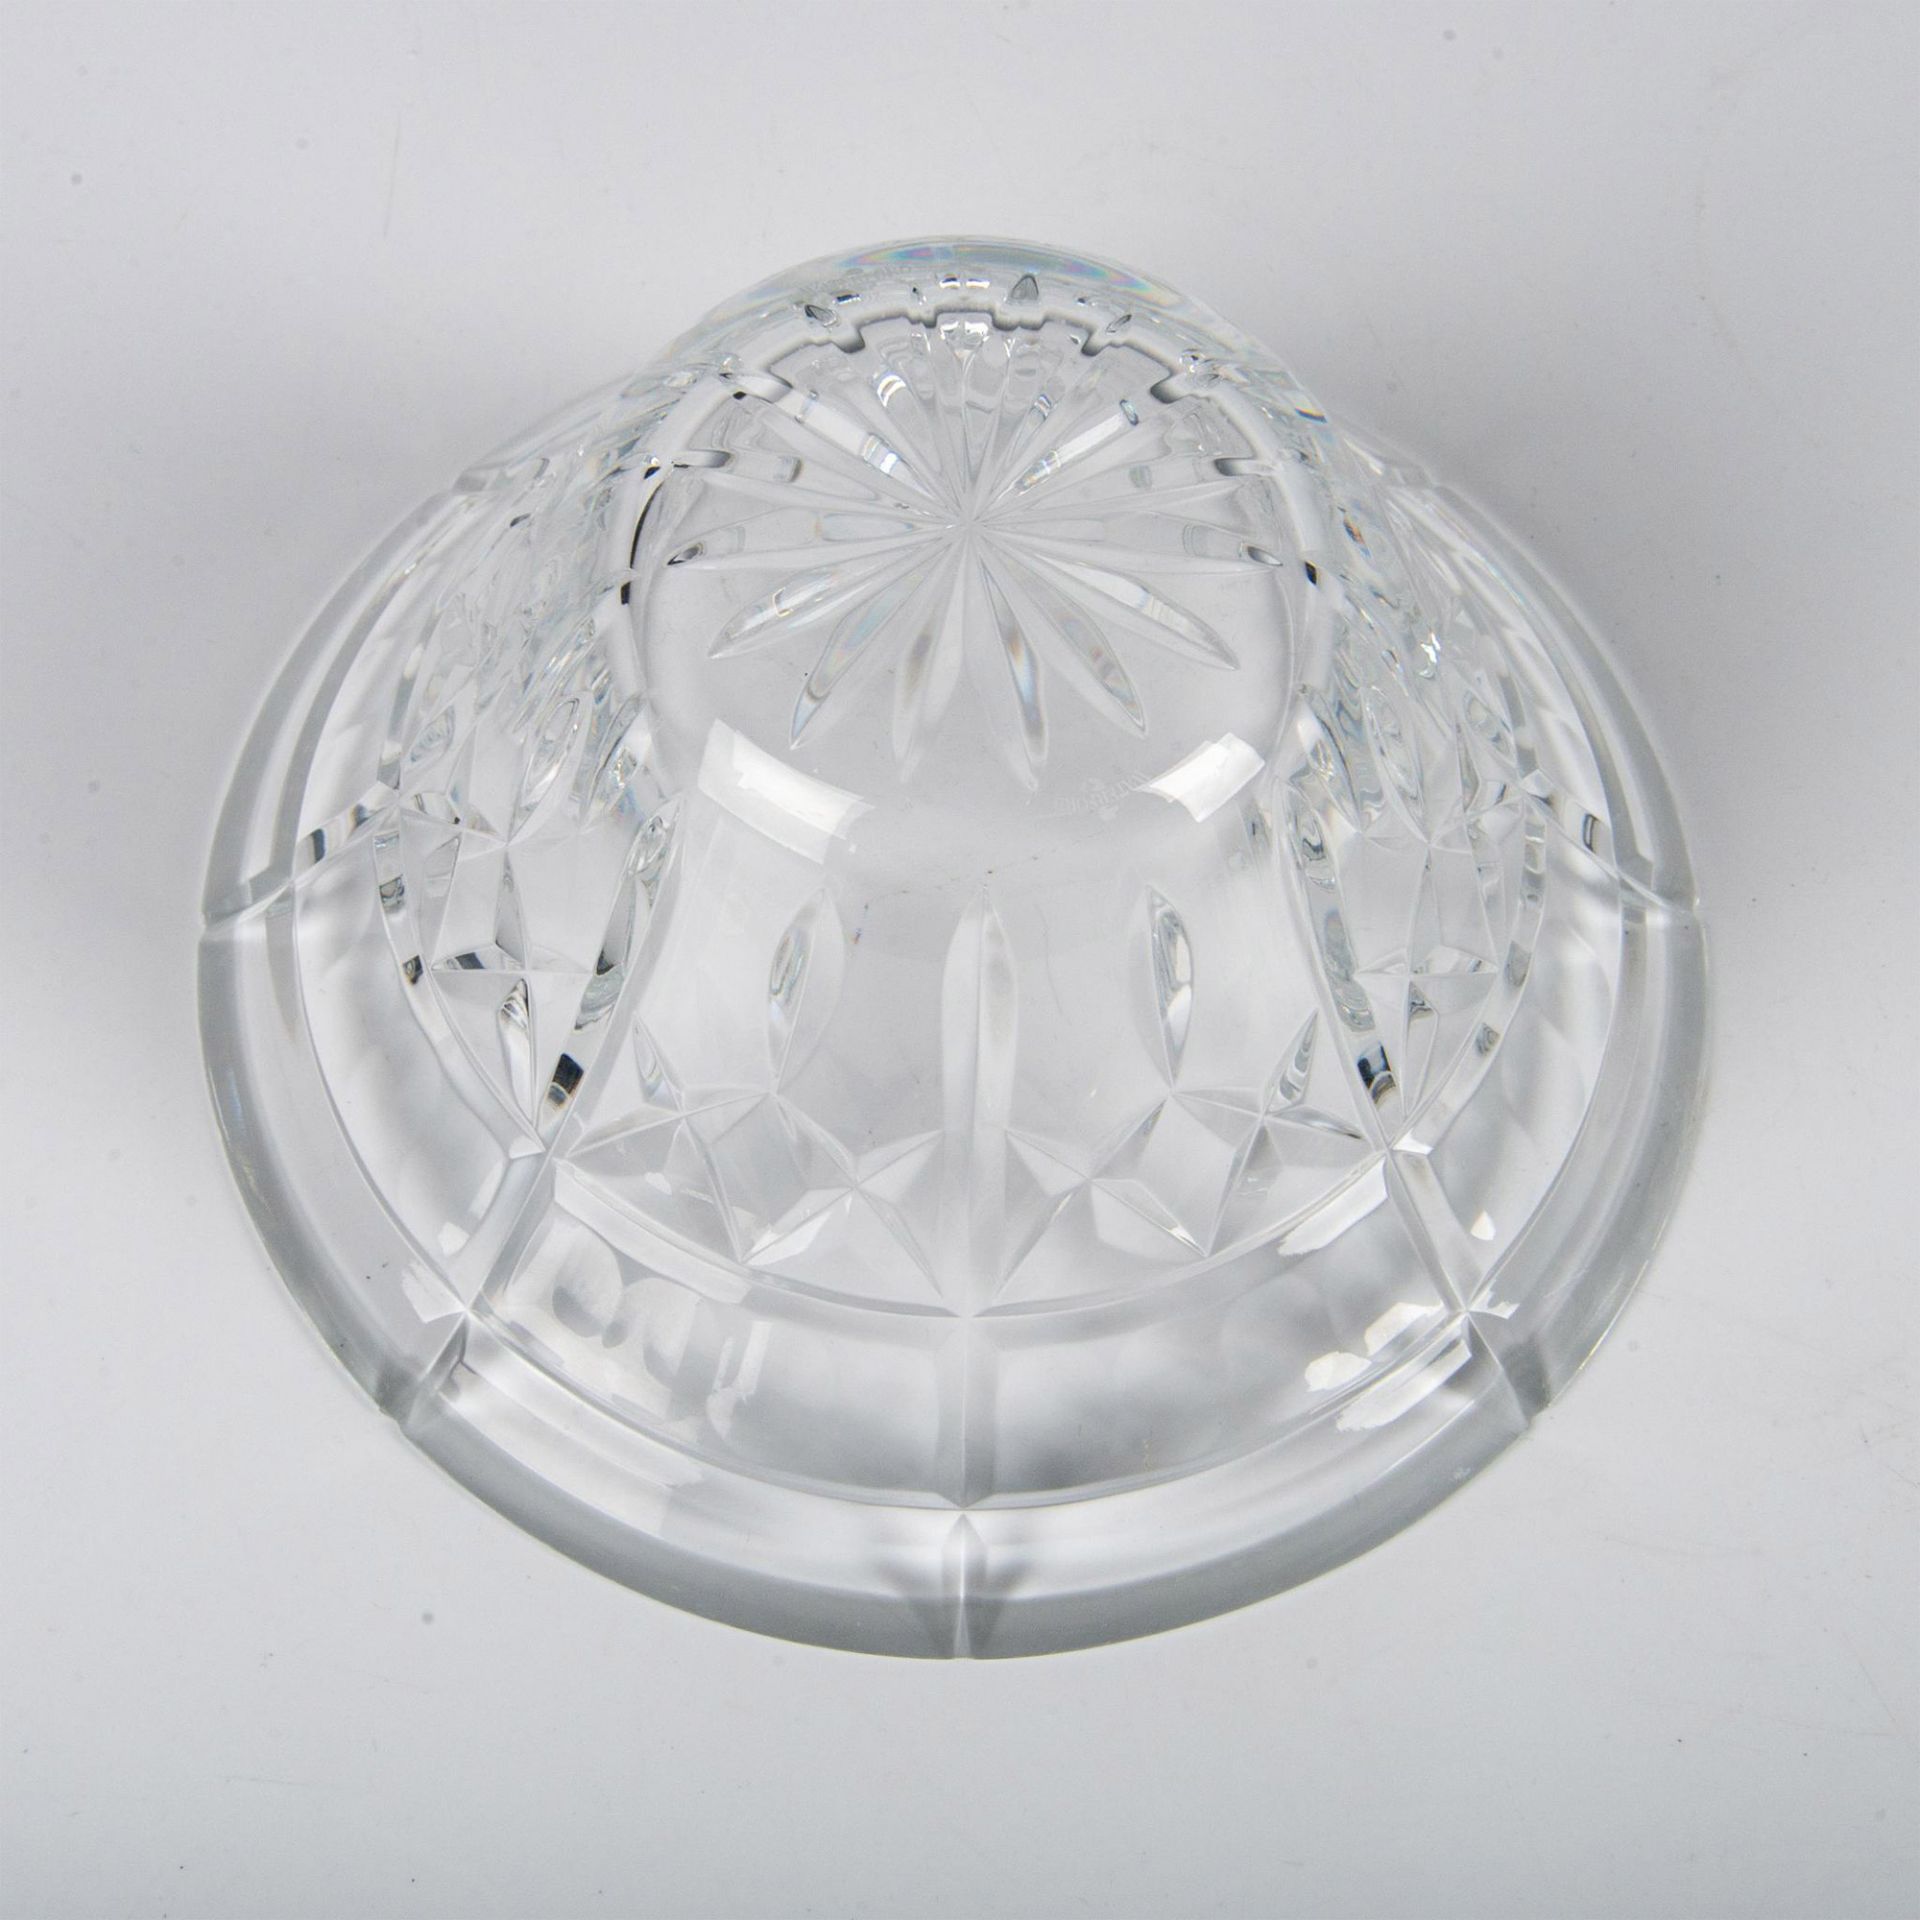 Waterford Crystal Flared Bowl, Sheridan - Image 3 of 4